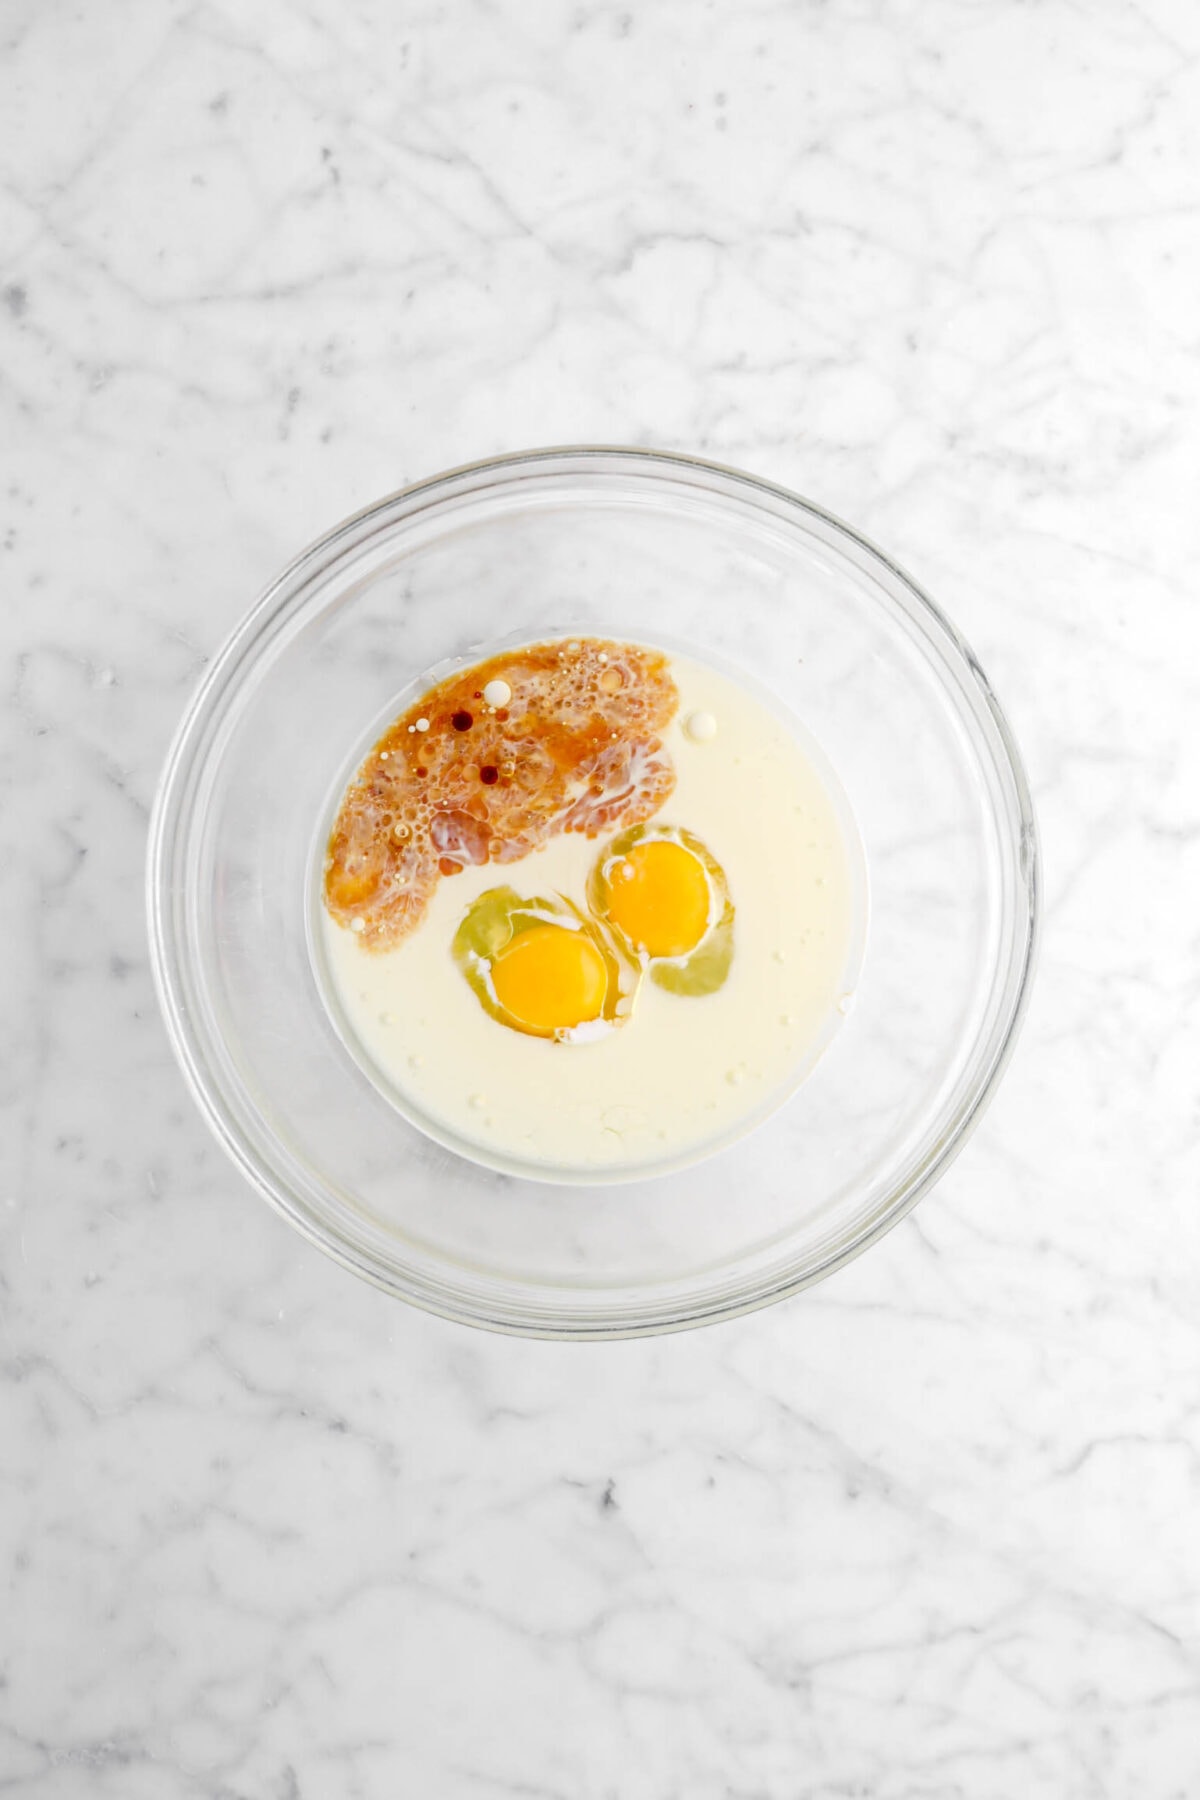 vanilla, vegetable oil, milk, and eggs in glass bowl.